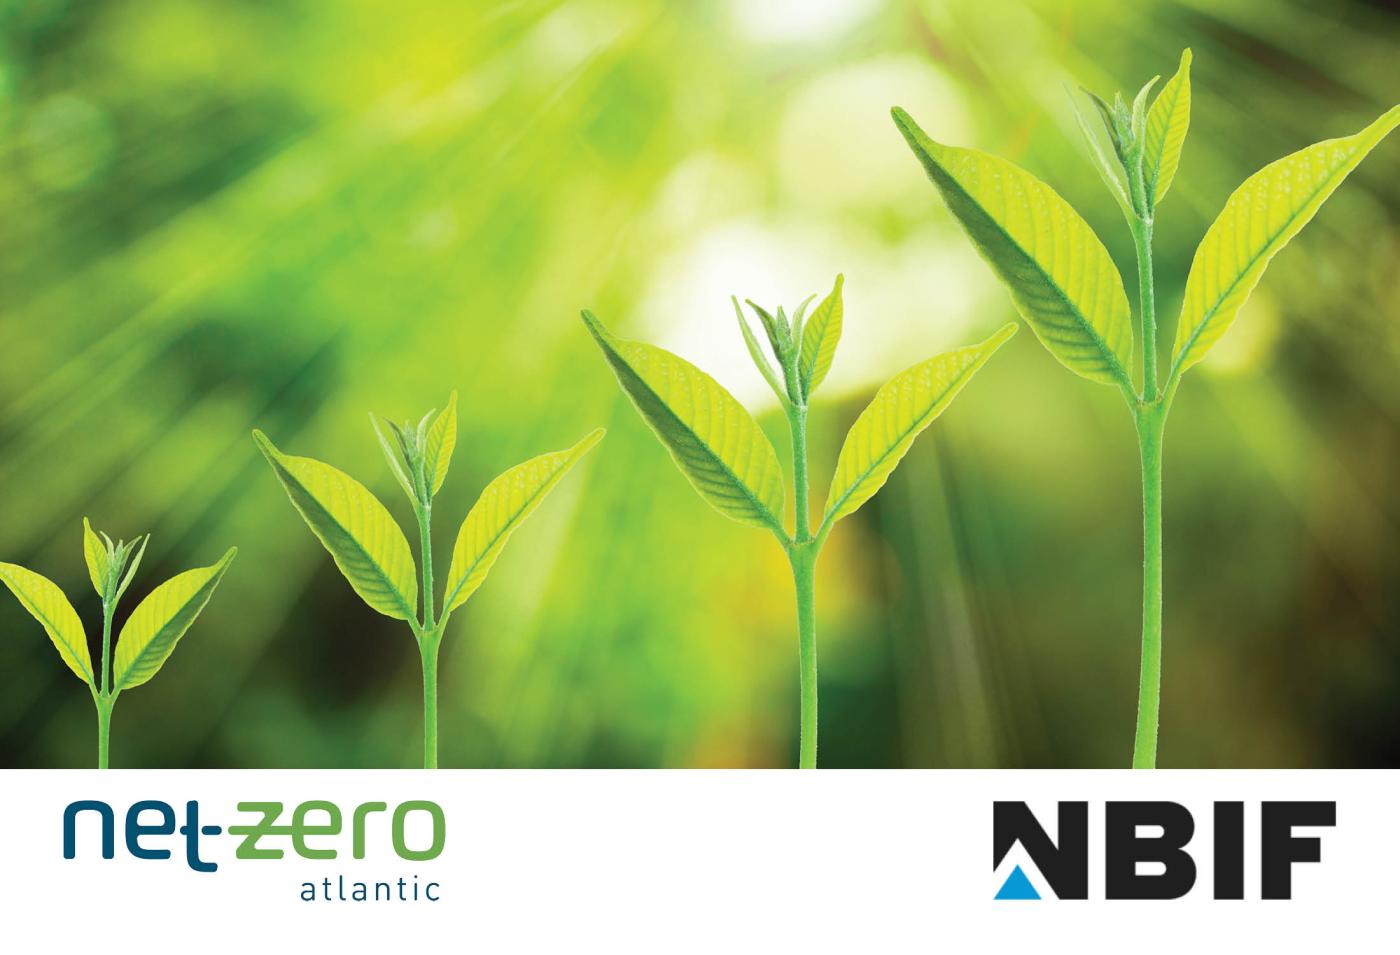 Logos for Net Zero Atlantic and NBIF